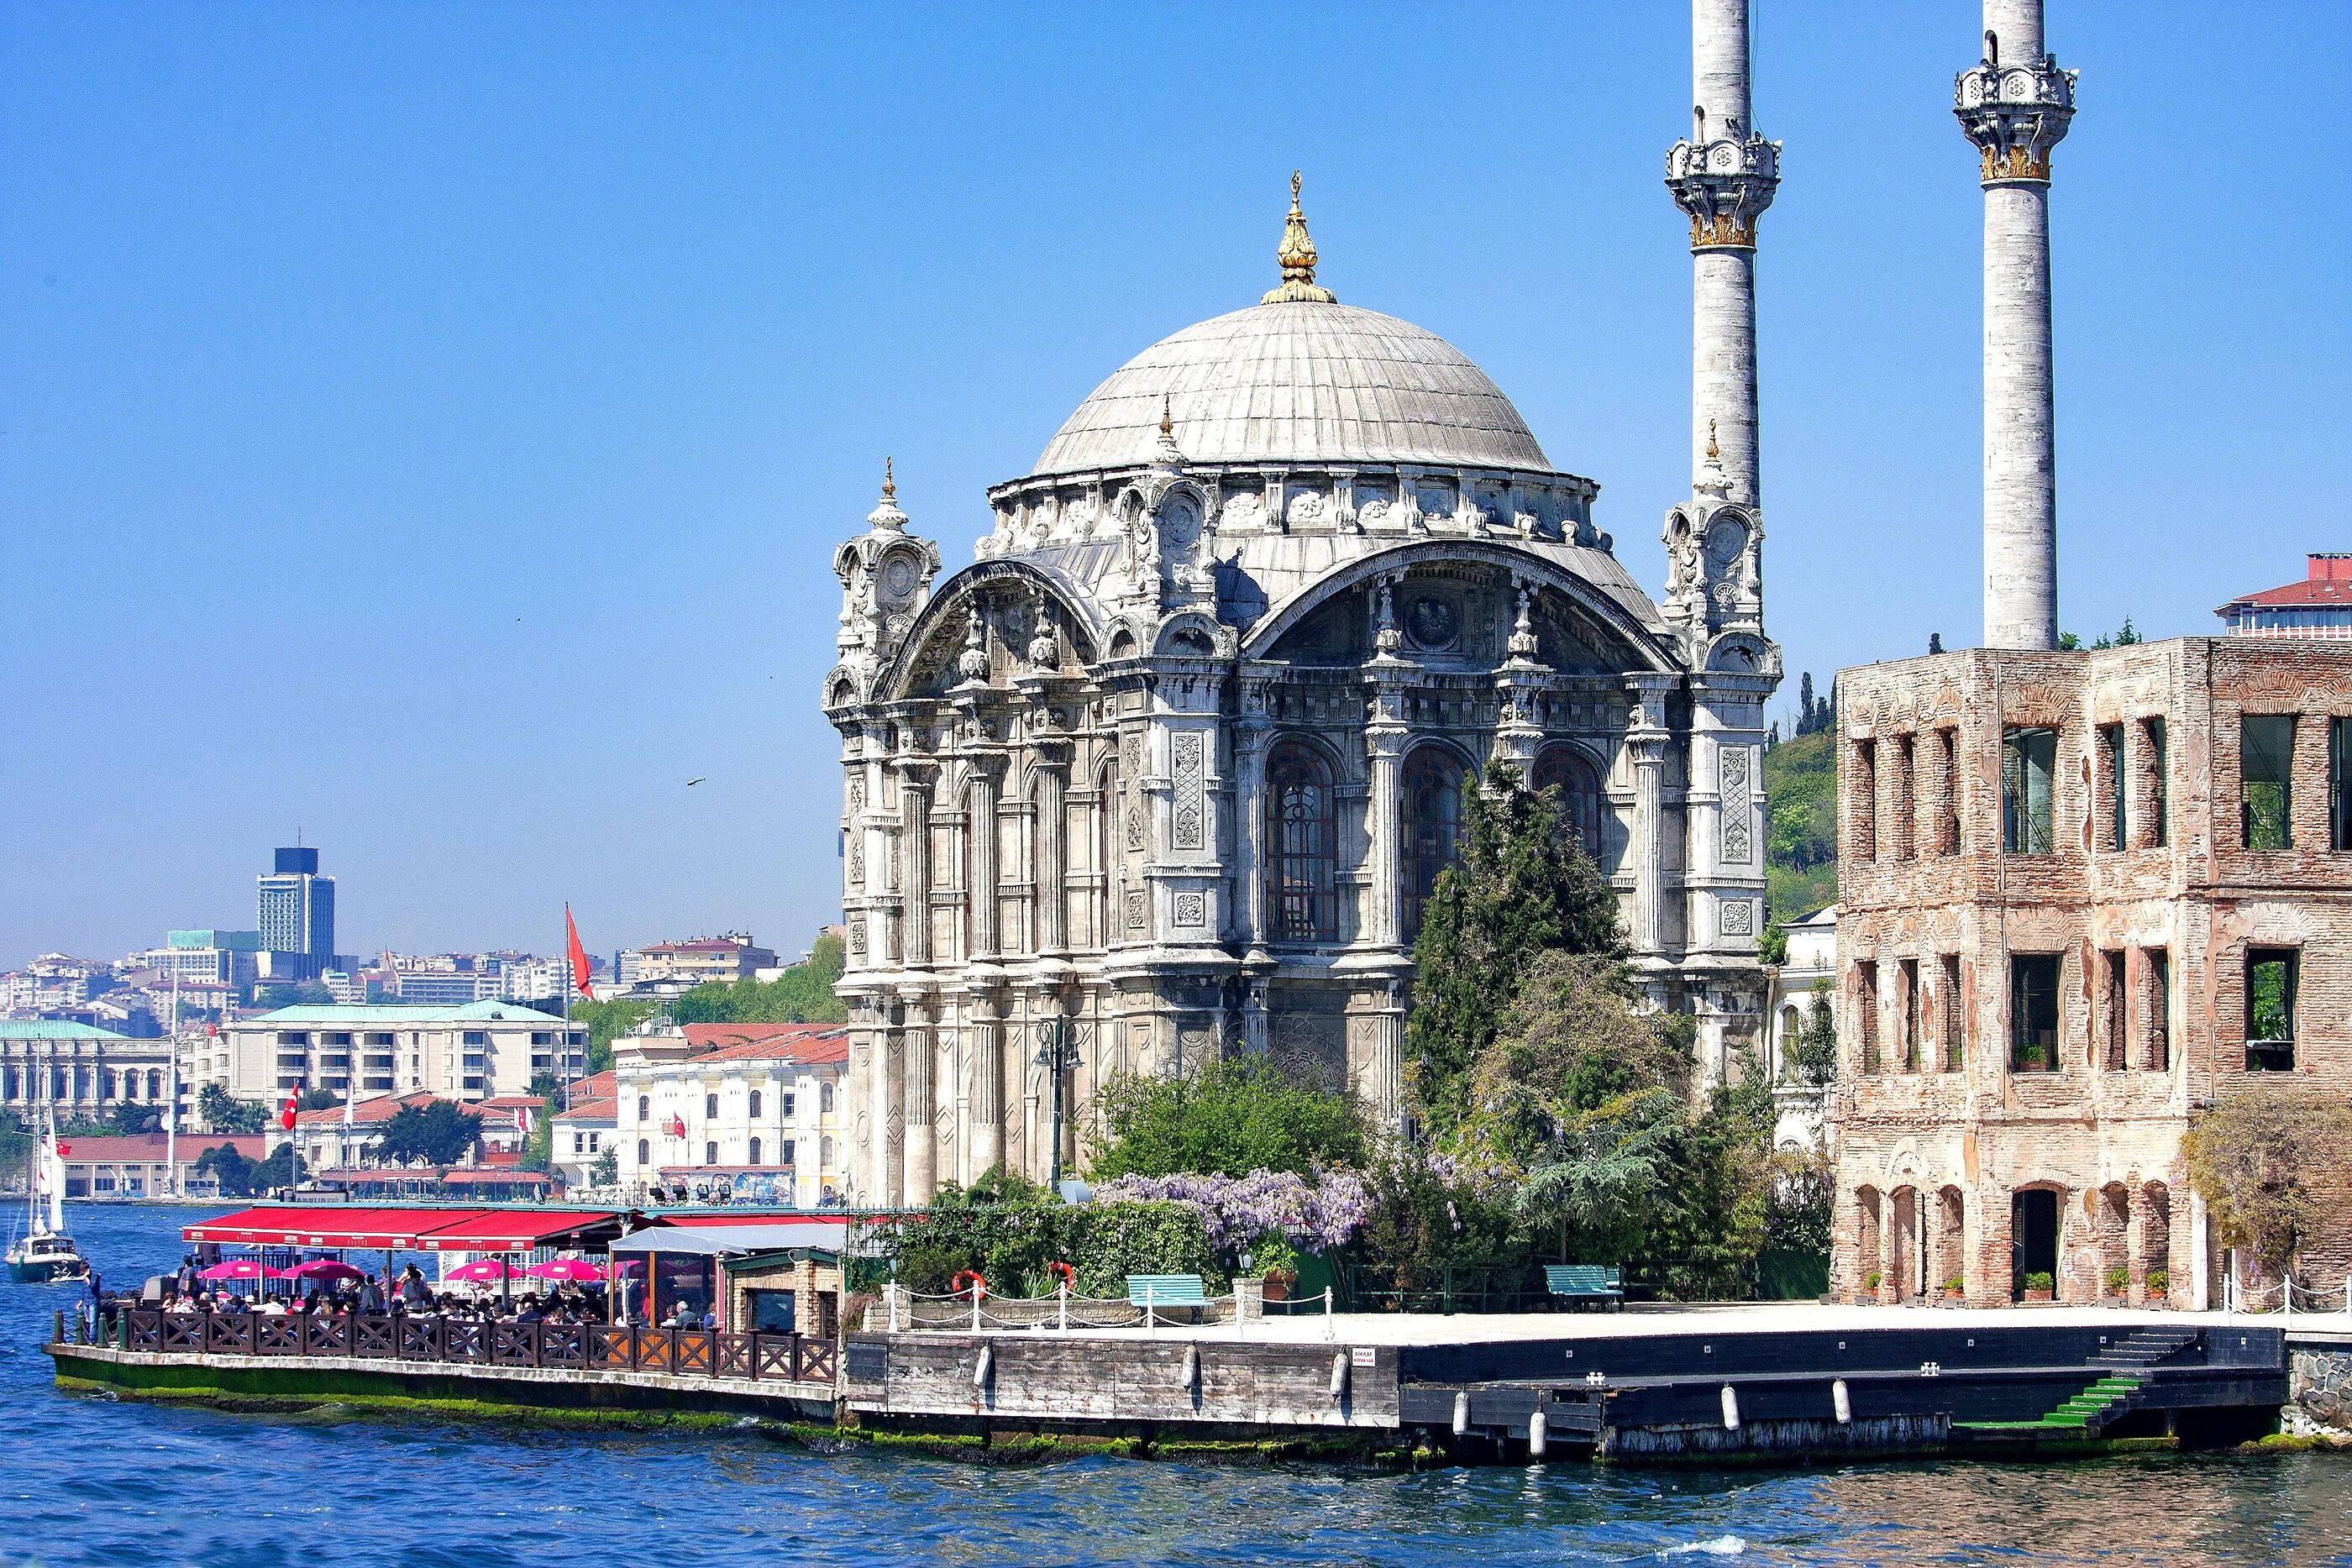 Turkey world. Стамбул фото наследие ЮНЕСКО. Istanbul sohillari. Istanbul Qalata kullesi. Turkish World.